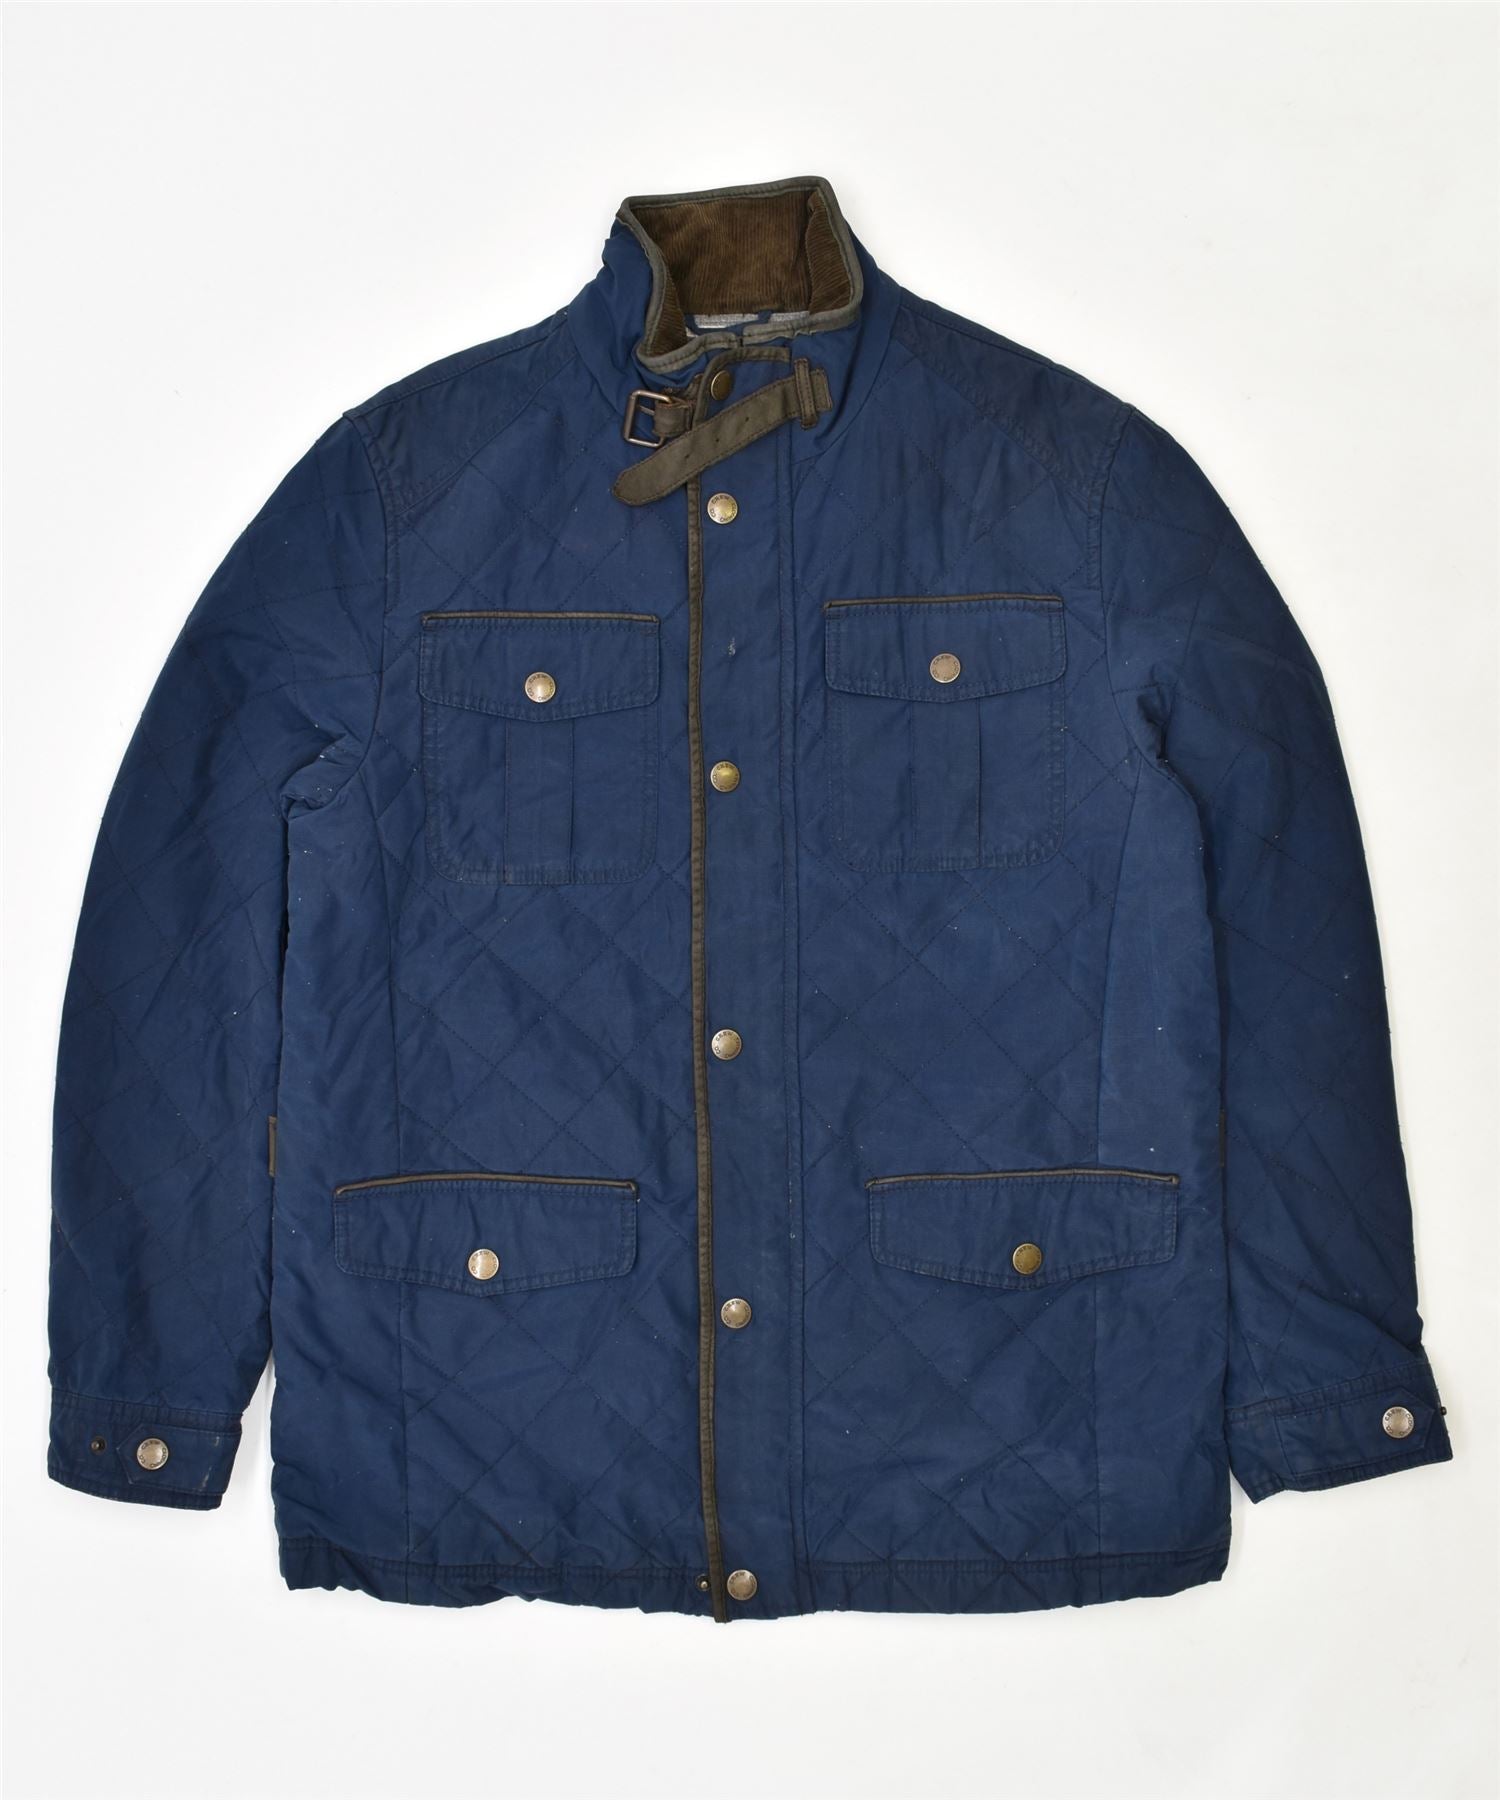 CREW CLOTHING Mens Quilted Jacket UK 38 Medium Navy Blue Cotton